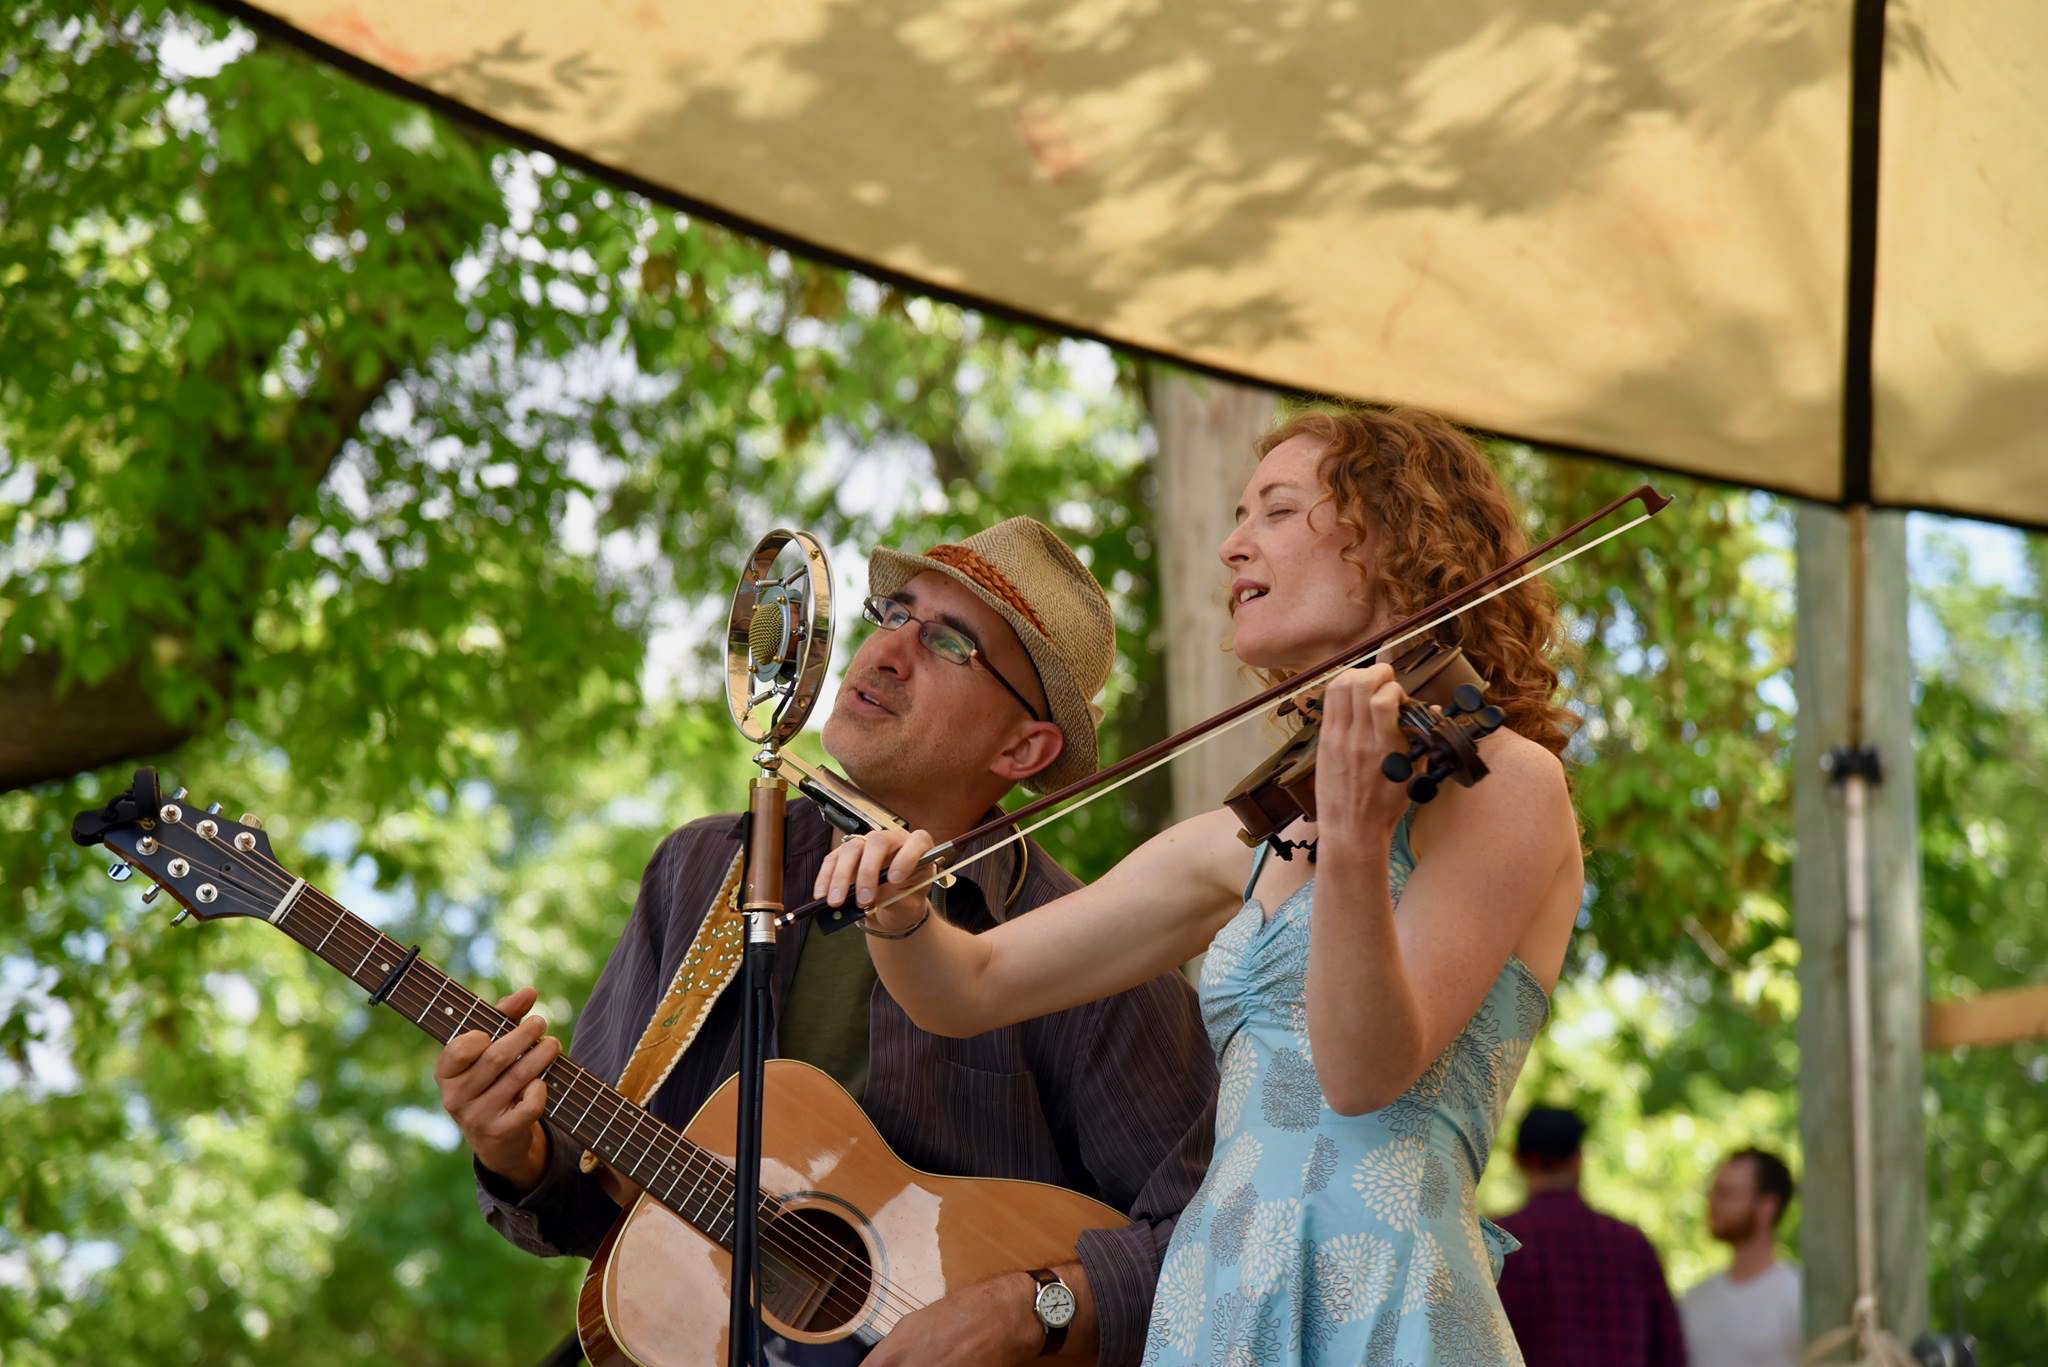 Dan Frechette & Laurel Thomsen performing at a festival